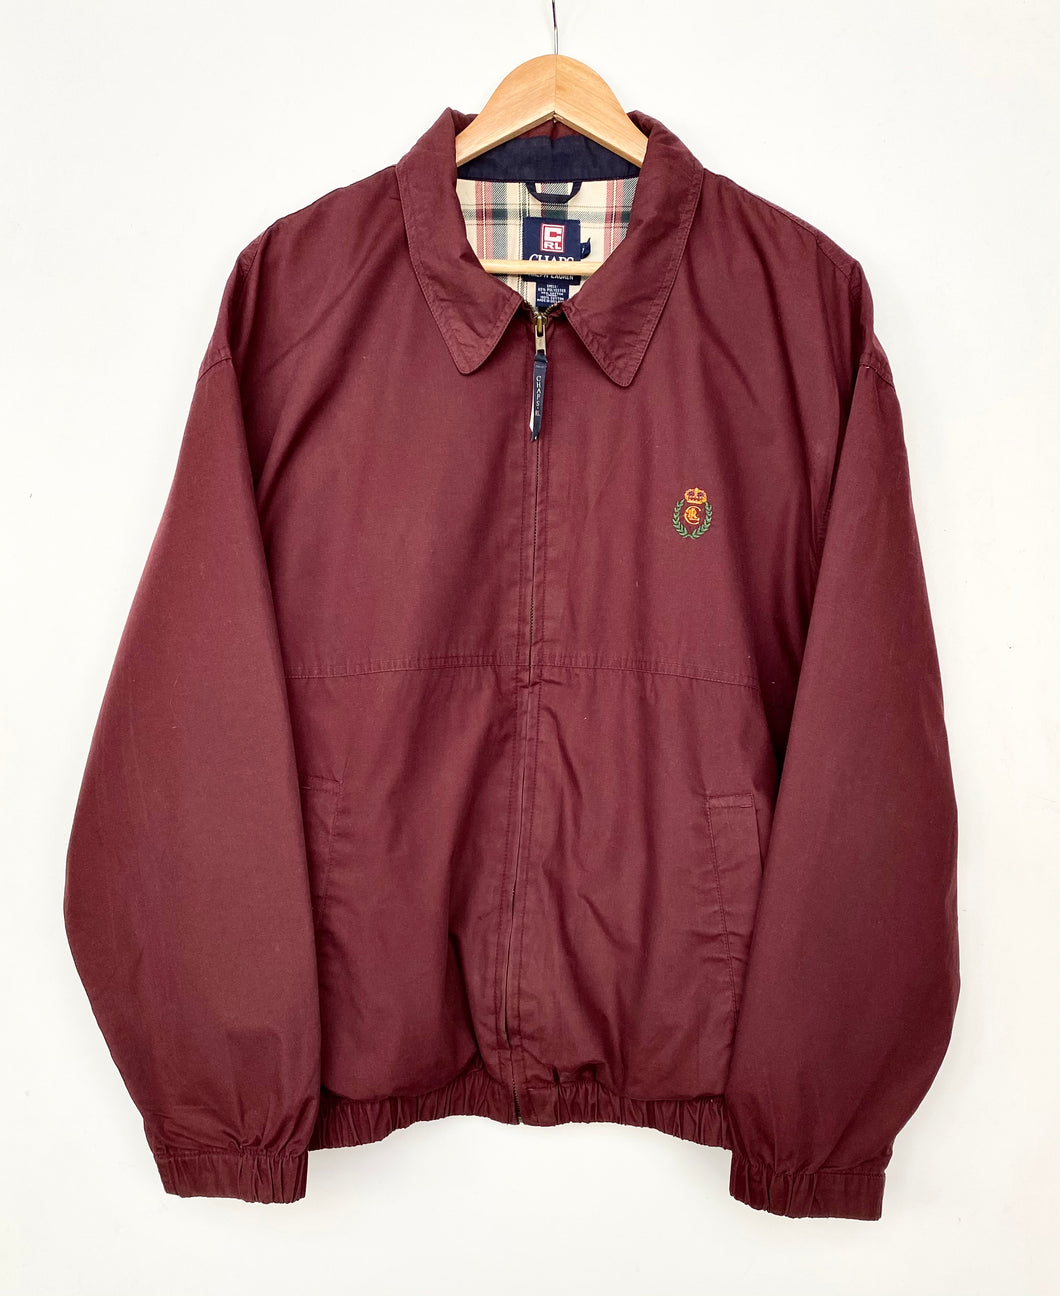 90s Chaps Ralph Lauren Harrington Jacket (XL)